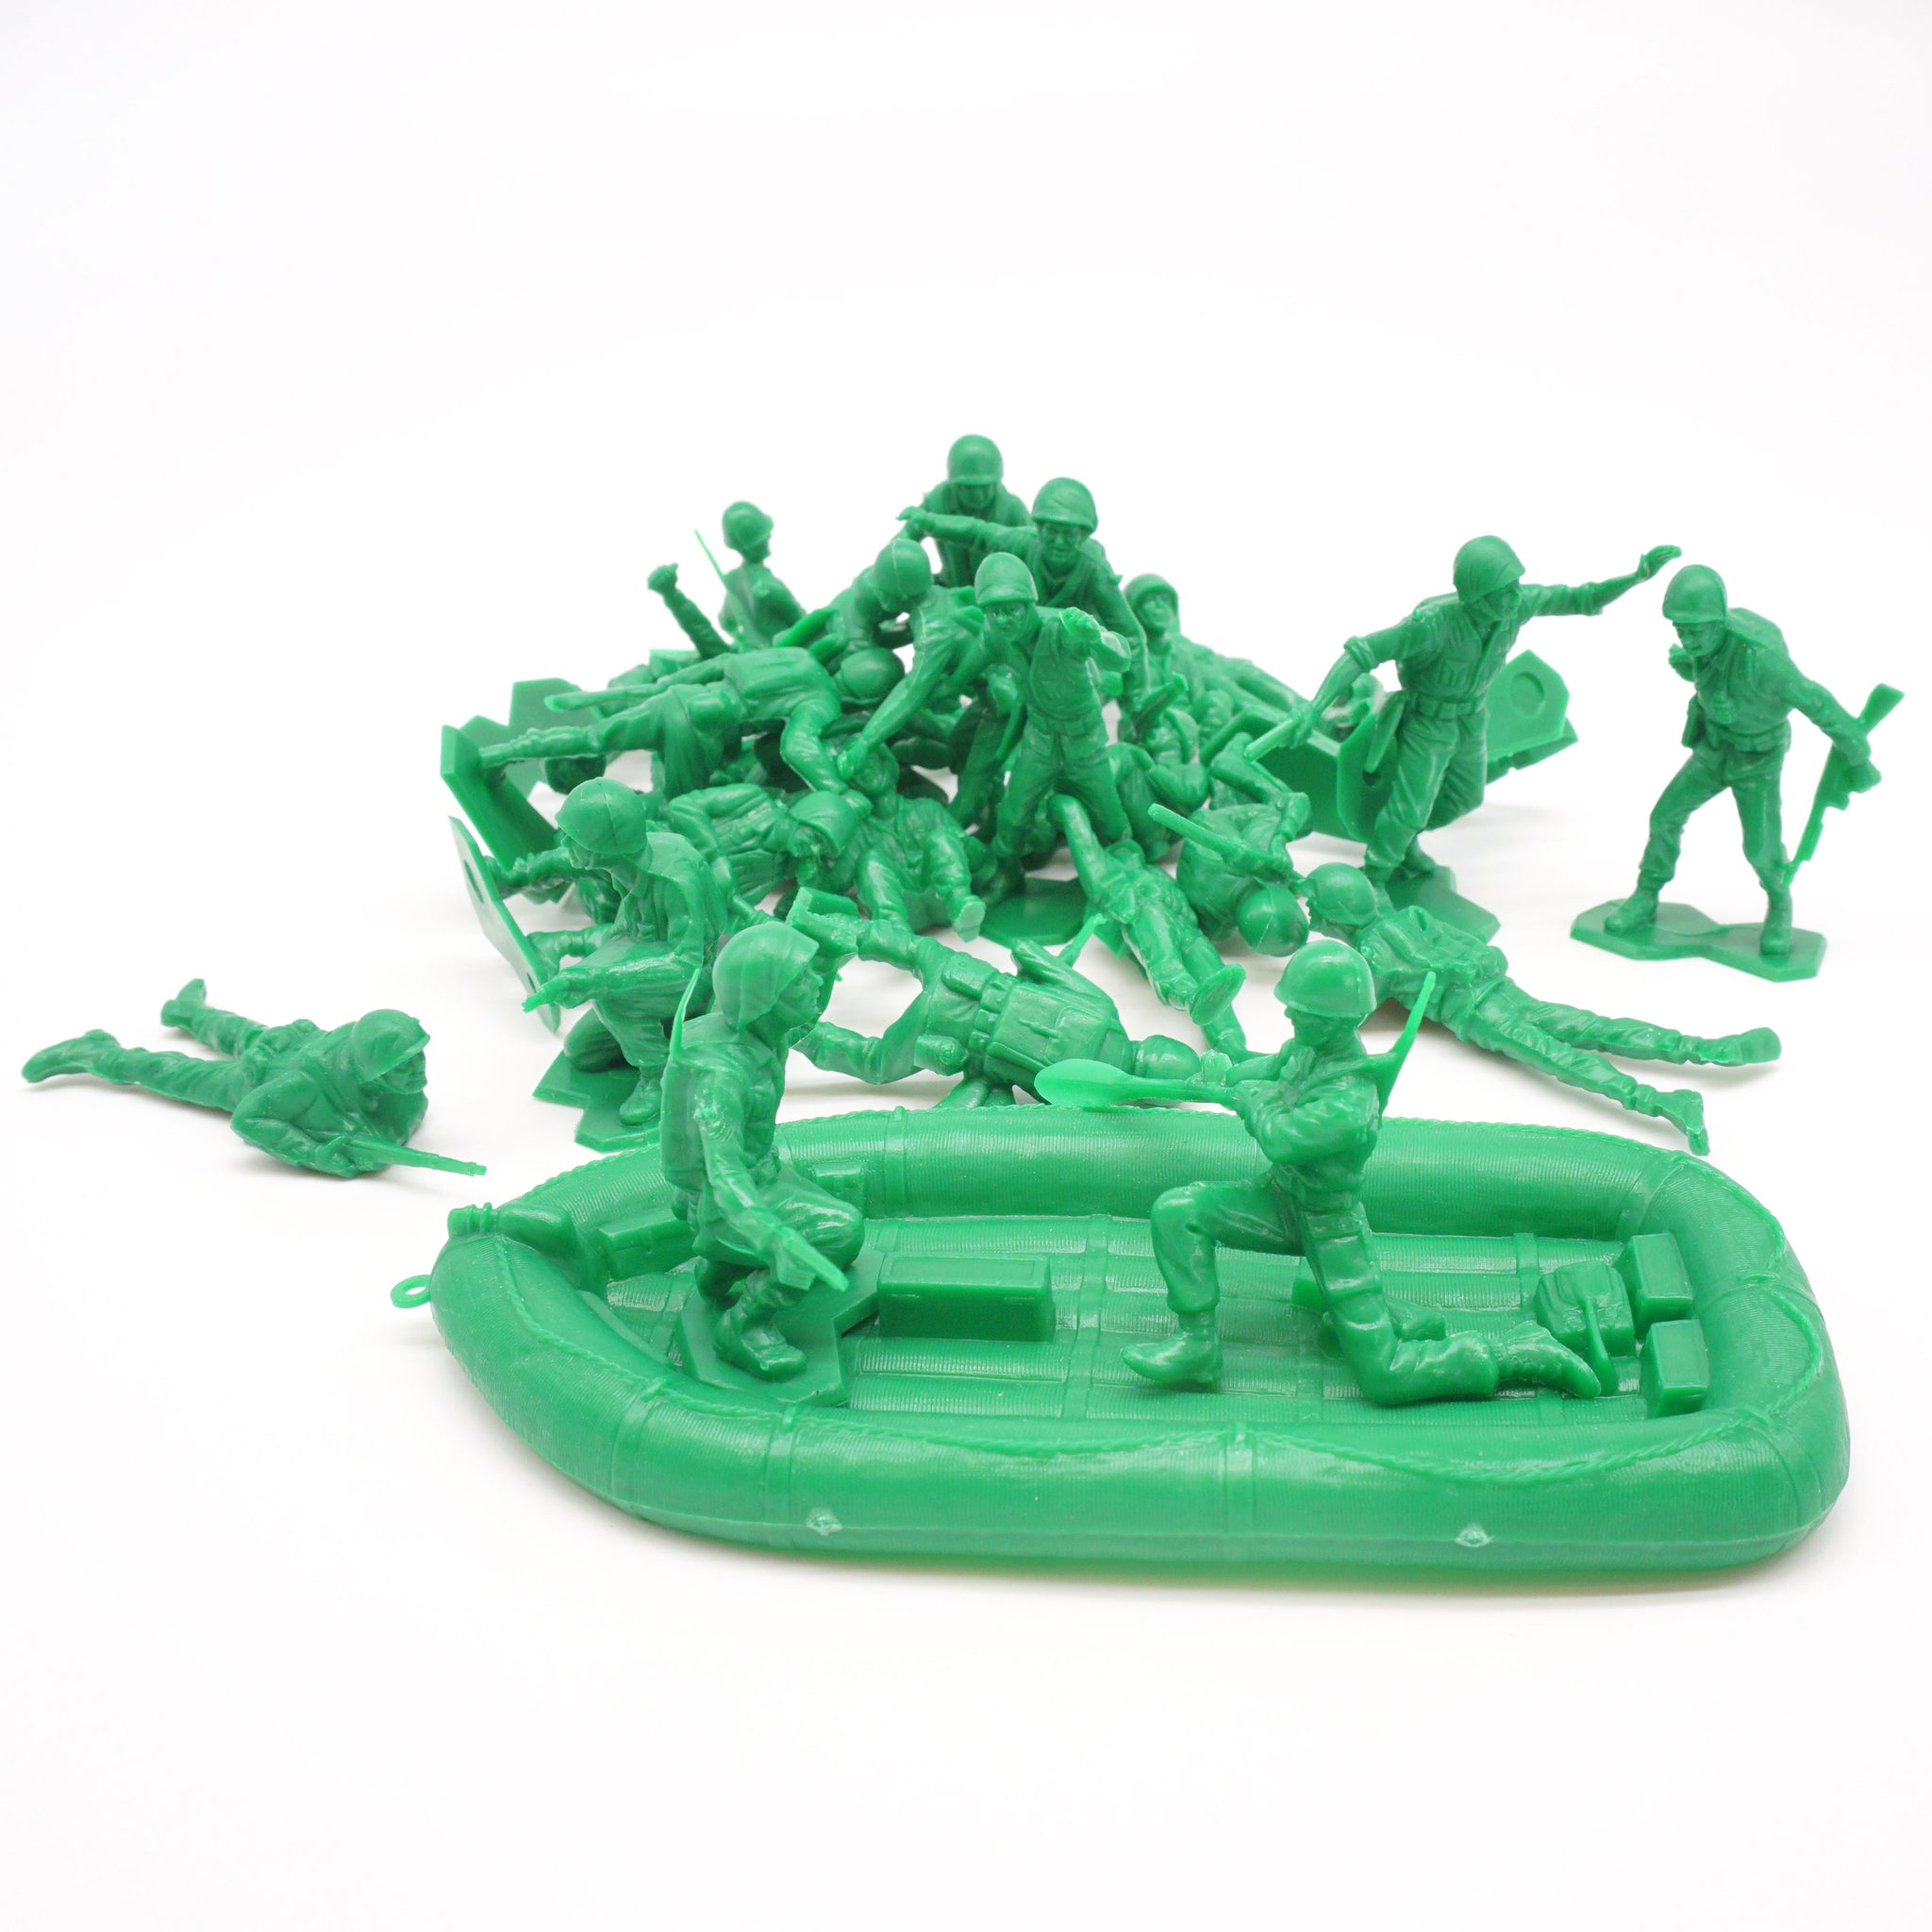 Combat Soldiers: Classic Plastic Army Men Figures